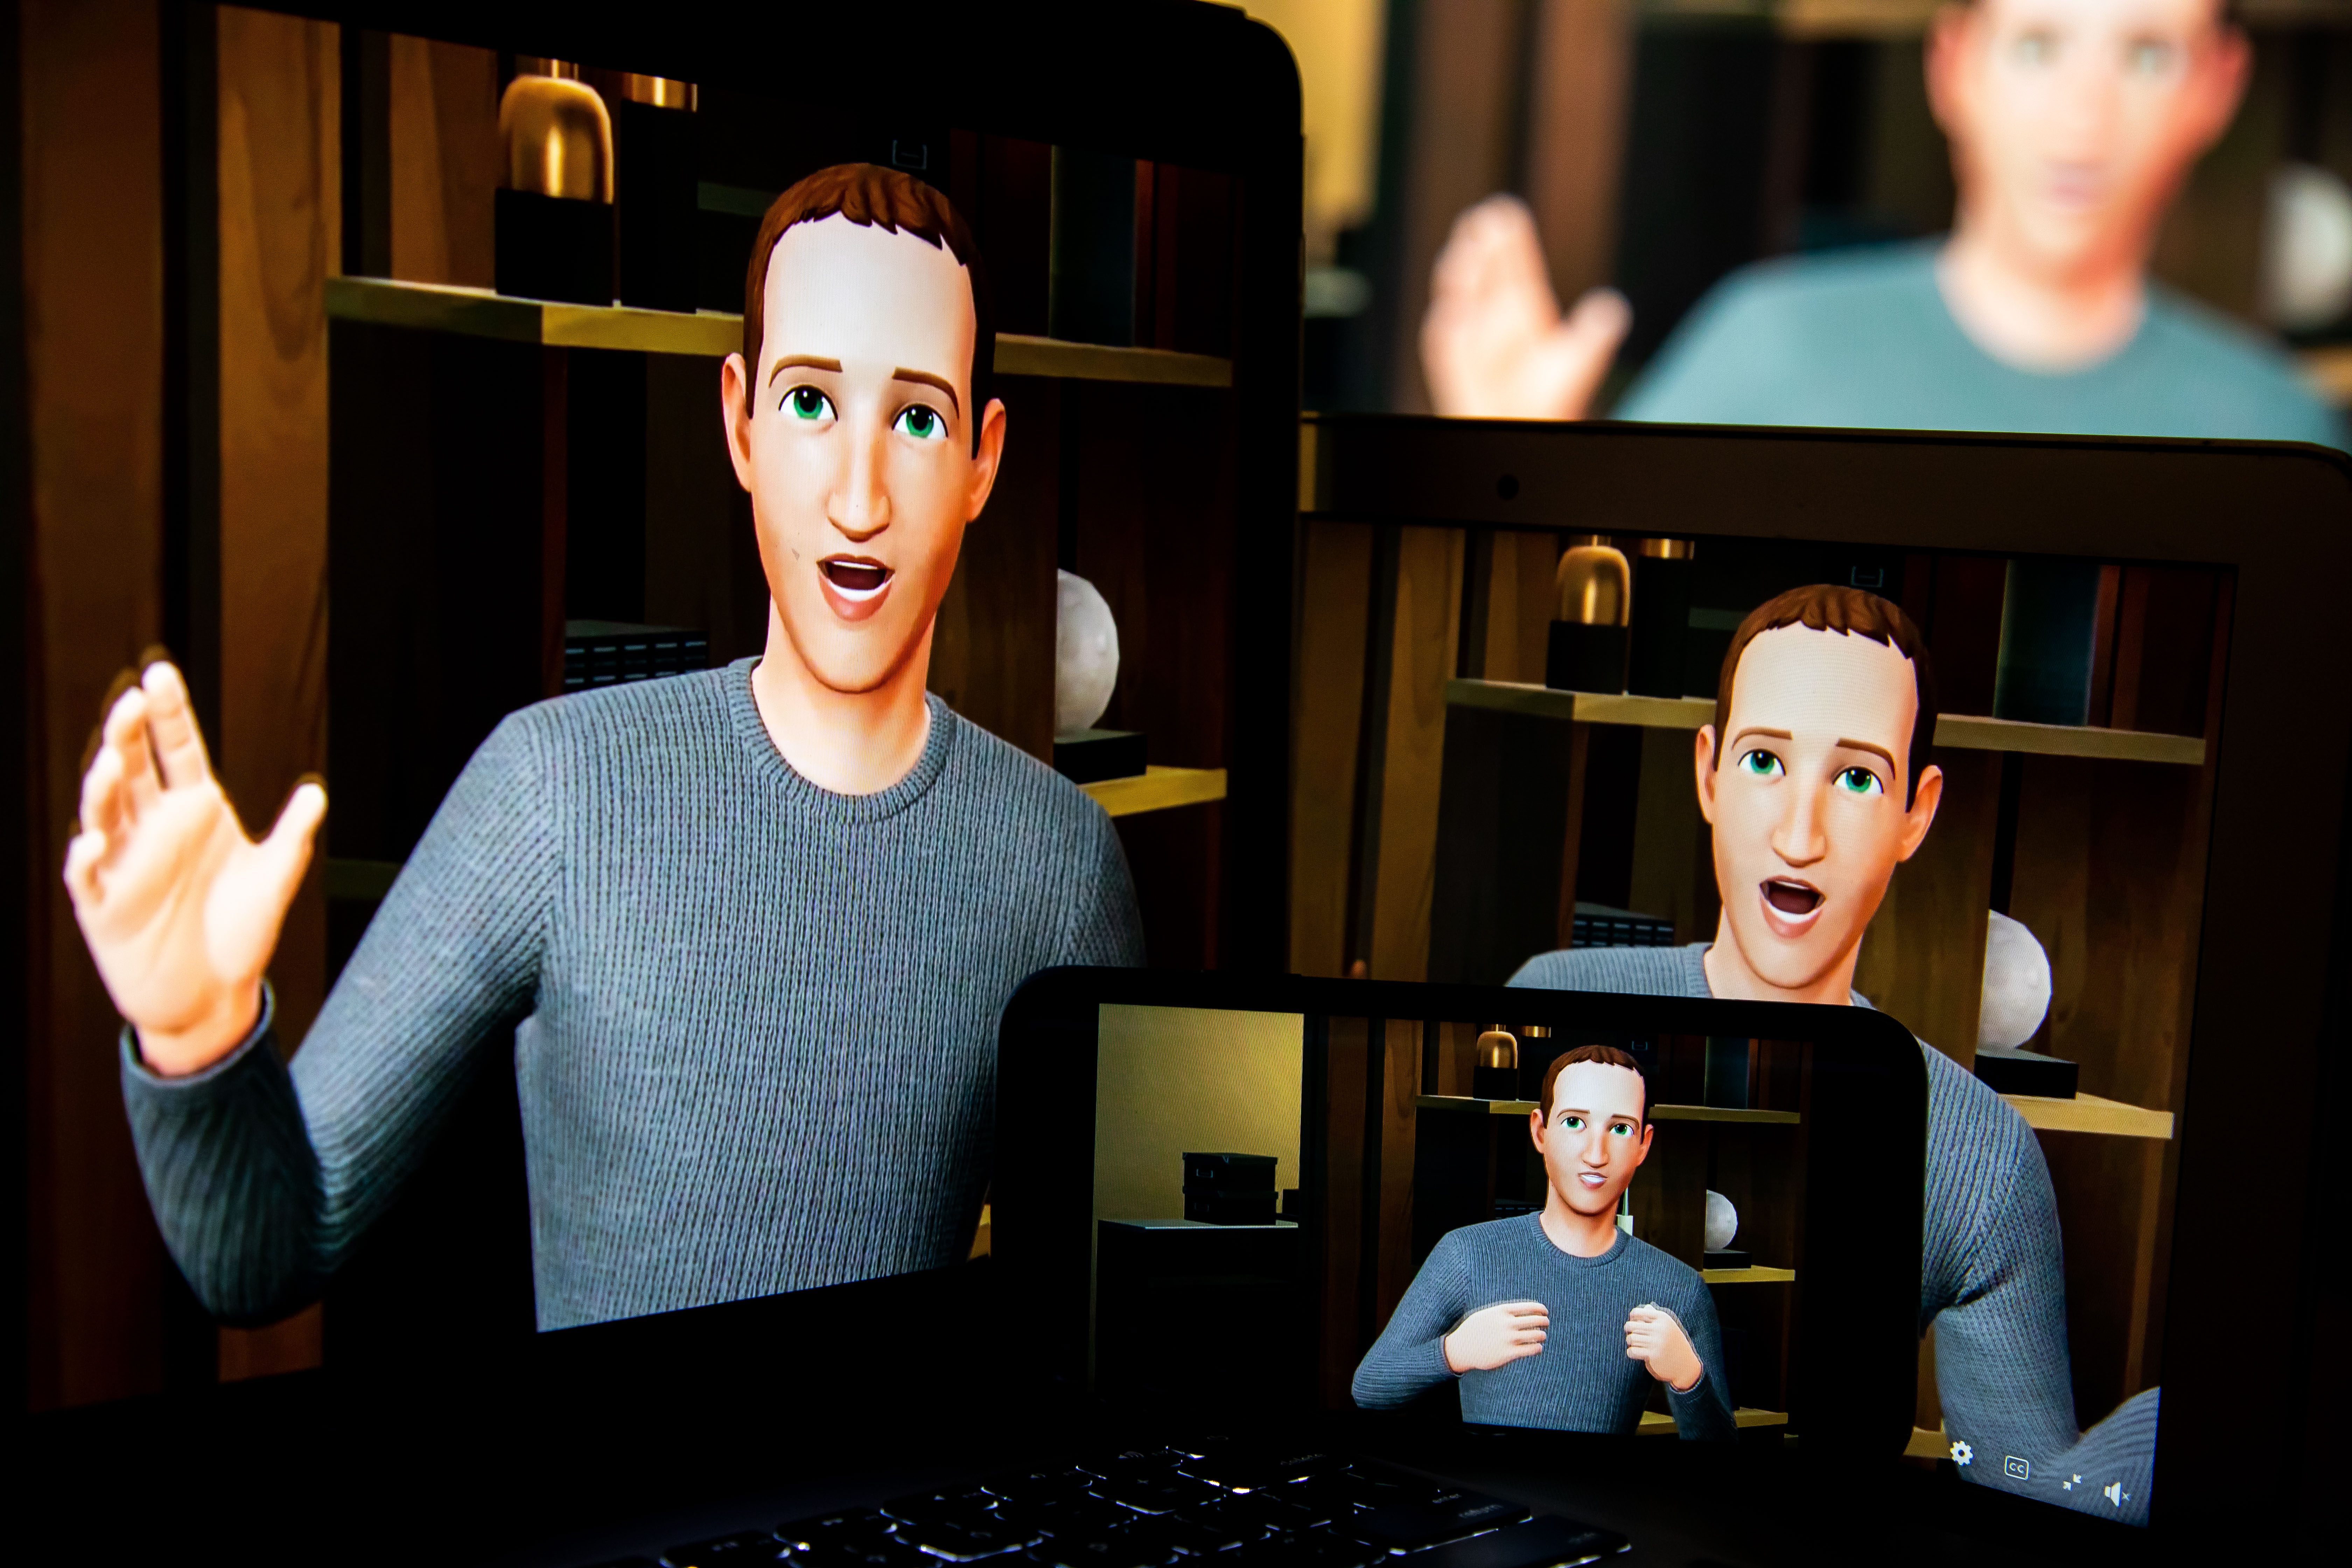 images de mark zuckerberg virtuel dans le métaverse